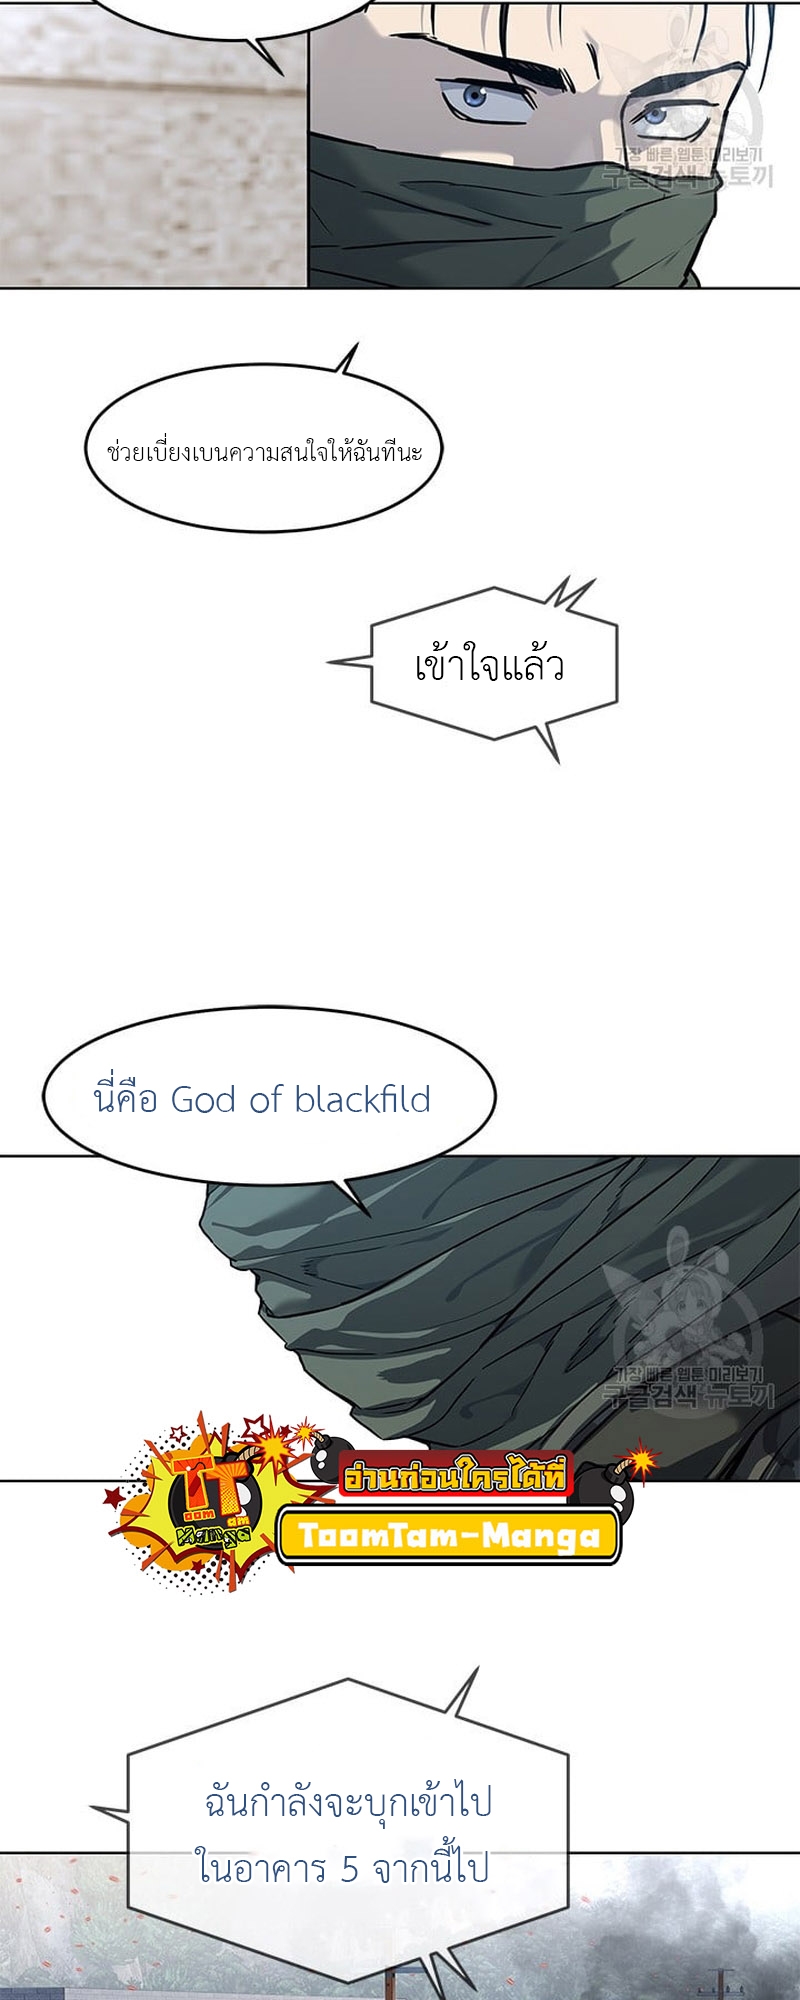 God of Blackfield 168 06 08 660020